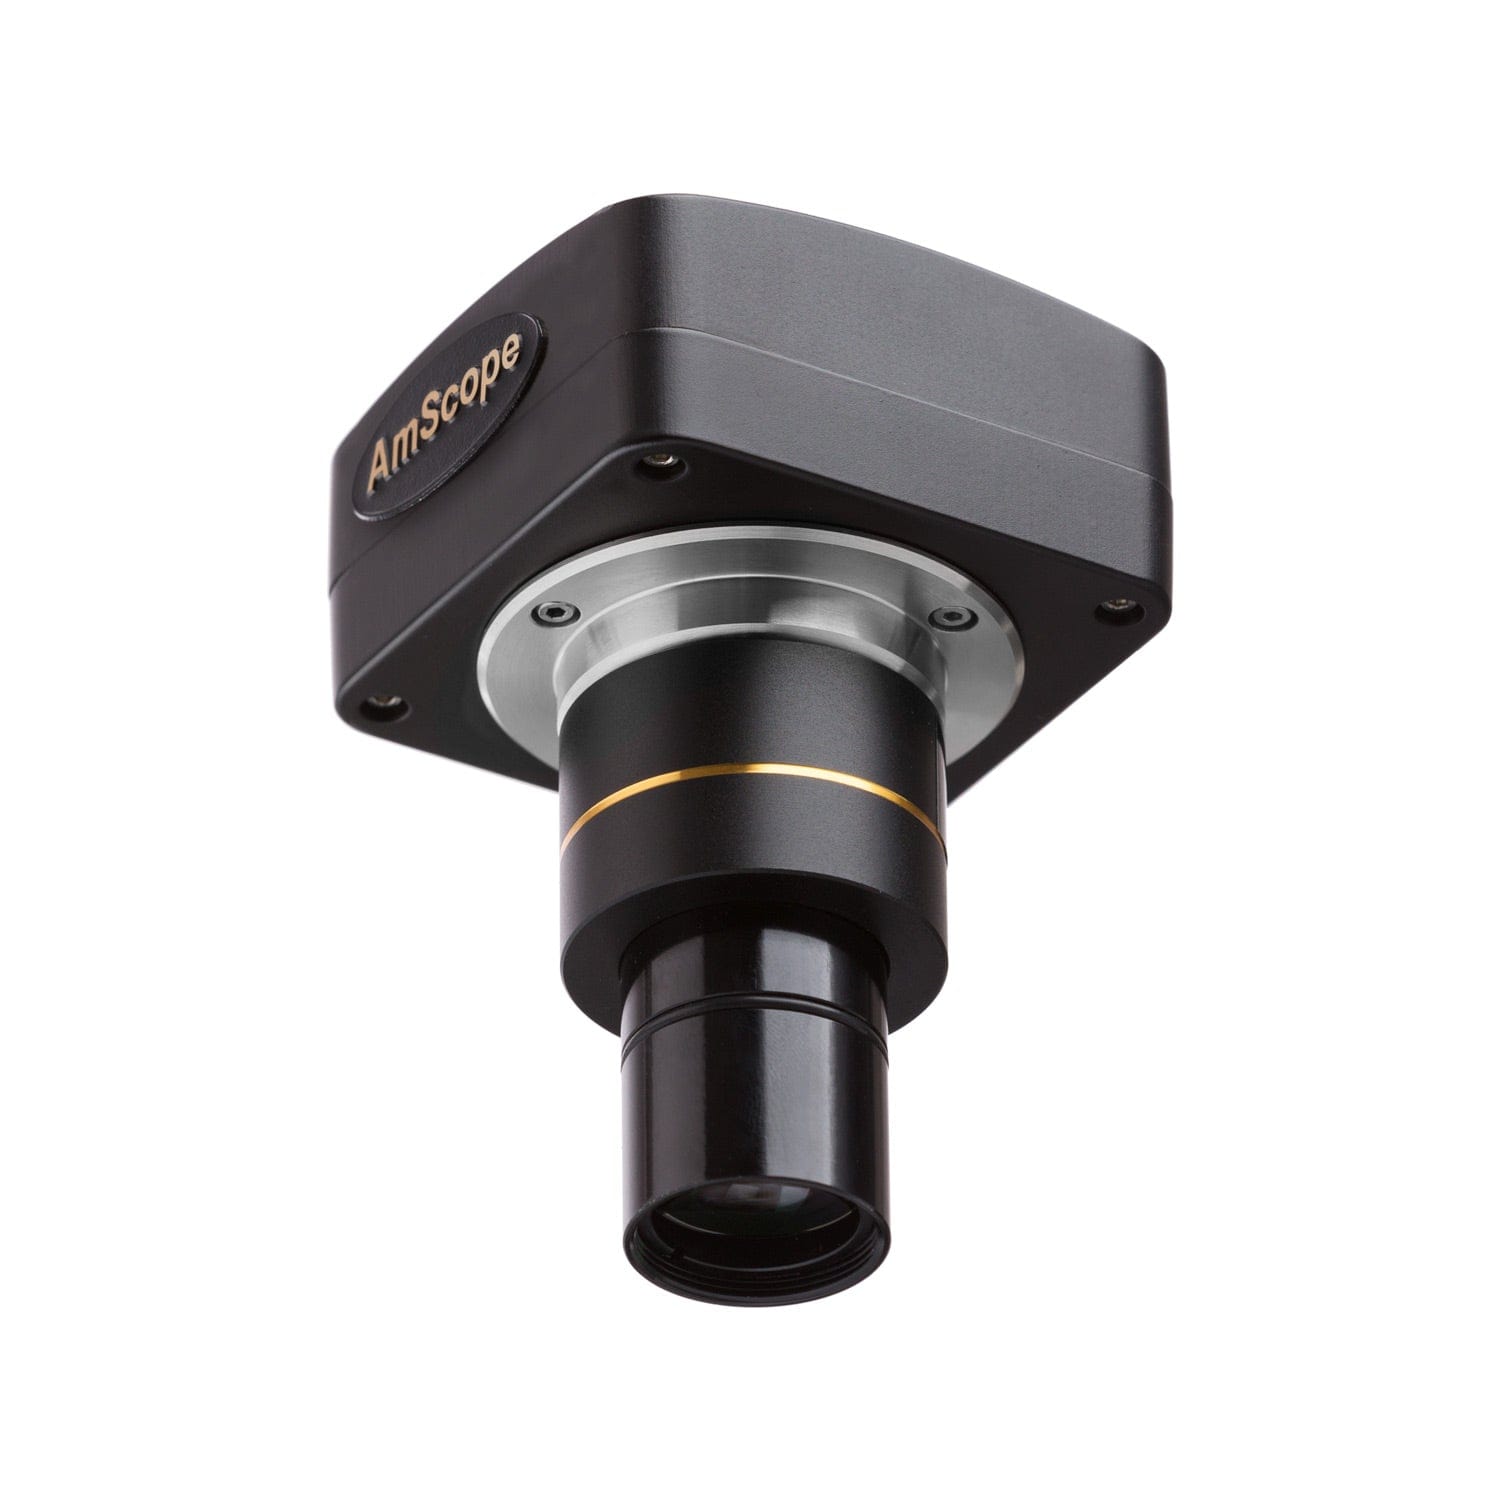 1.3MP USB2 Measuring Software Microscope Digital Camera – AmScope